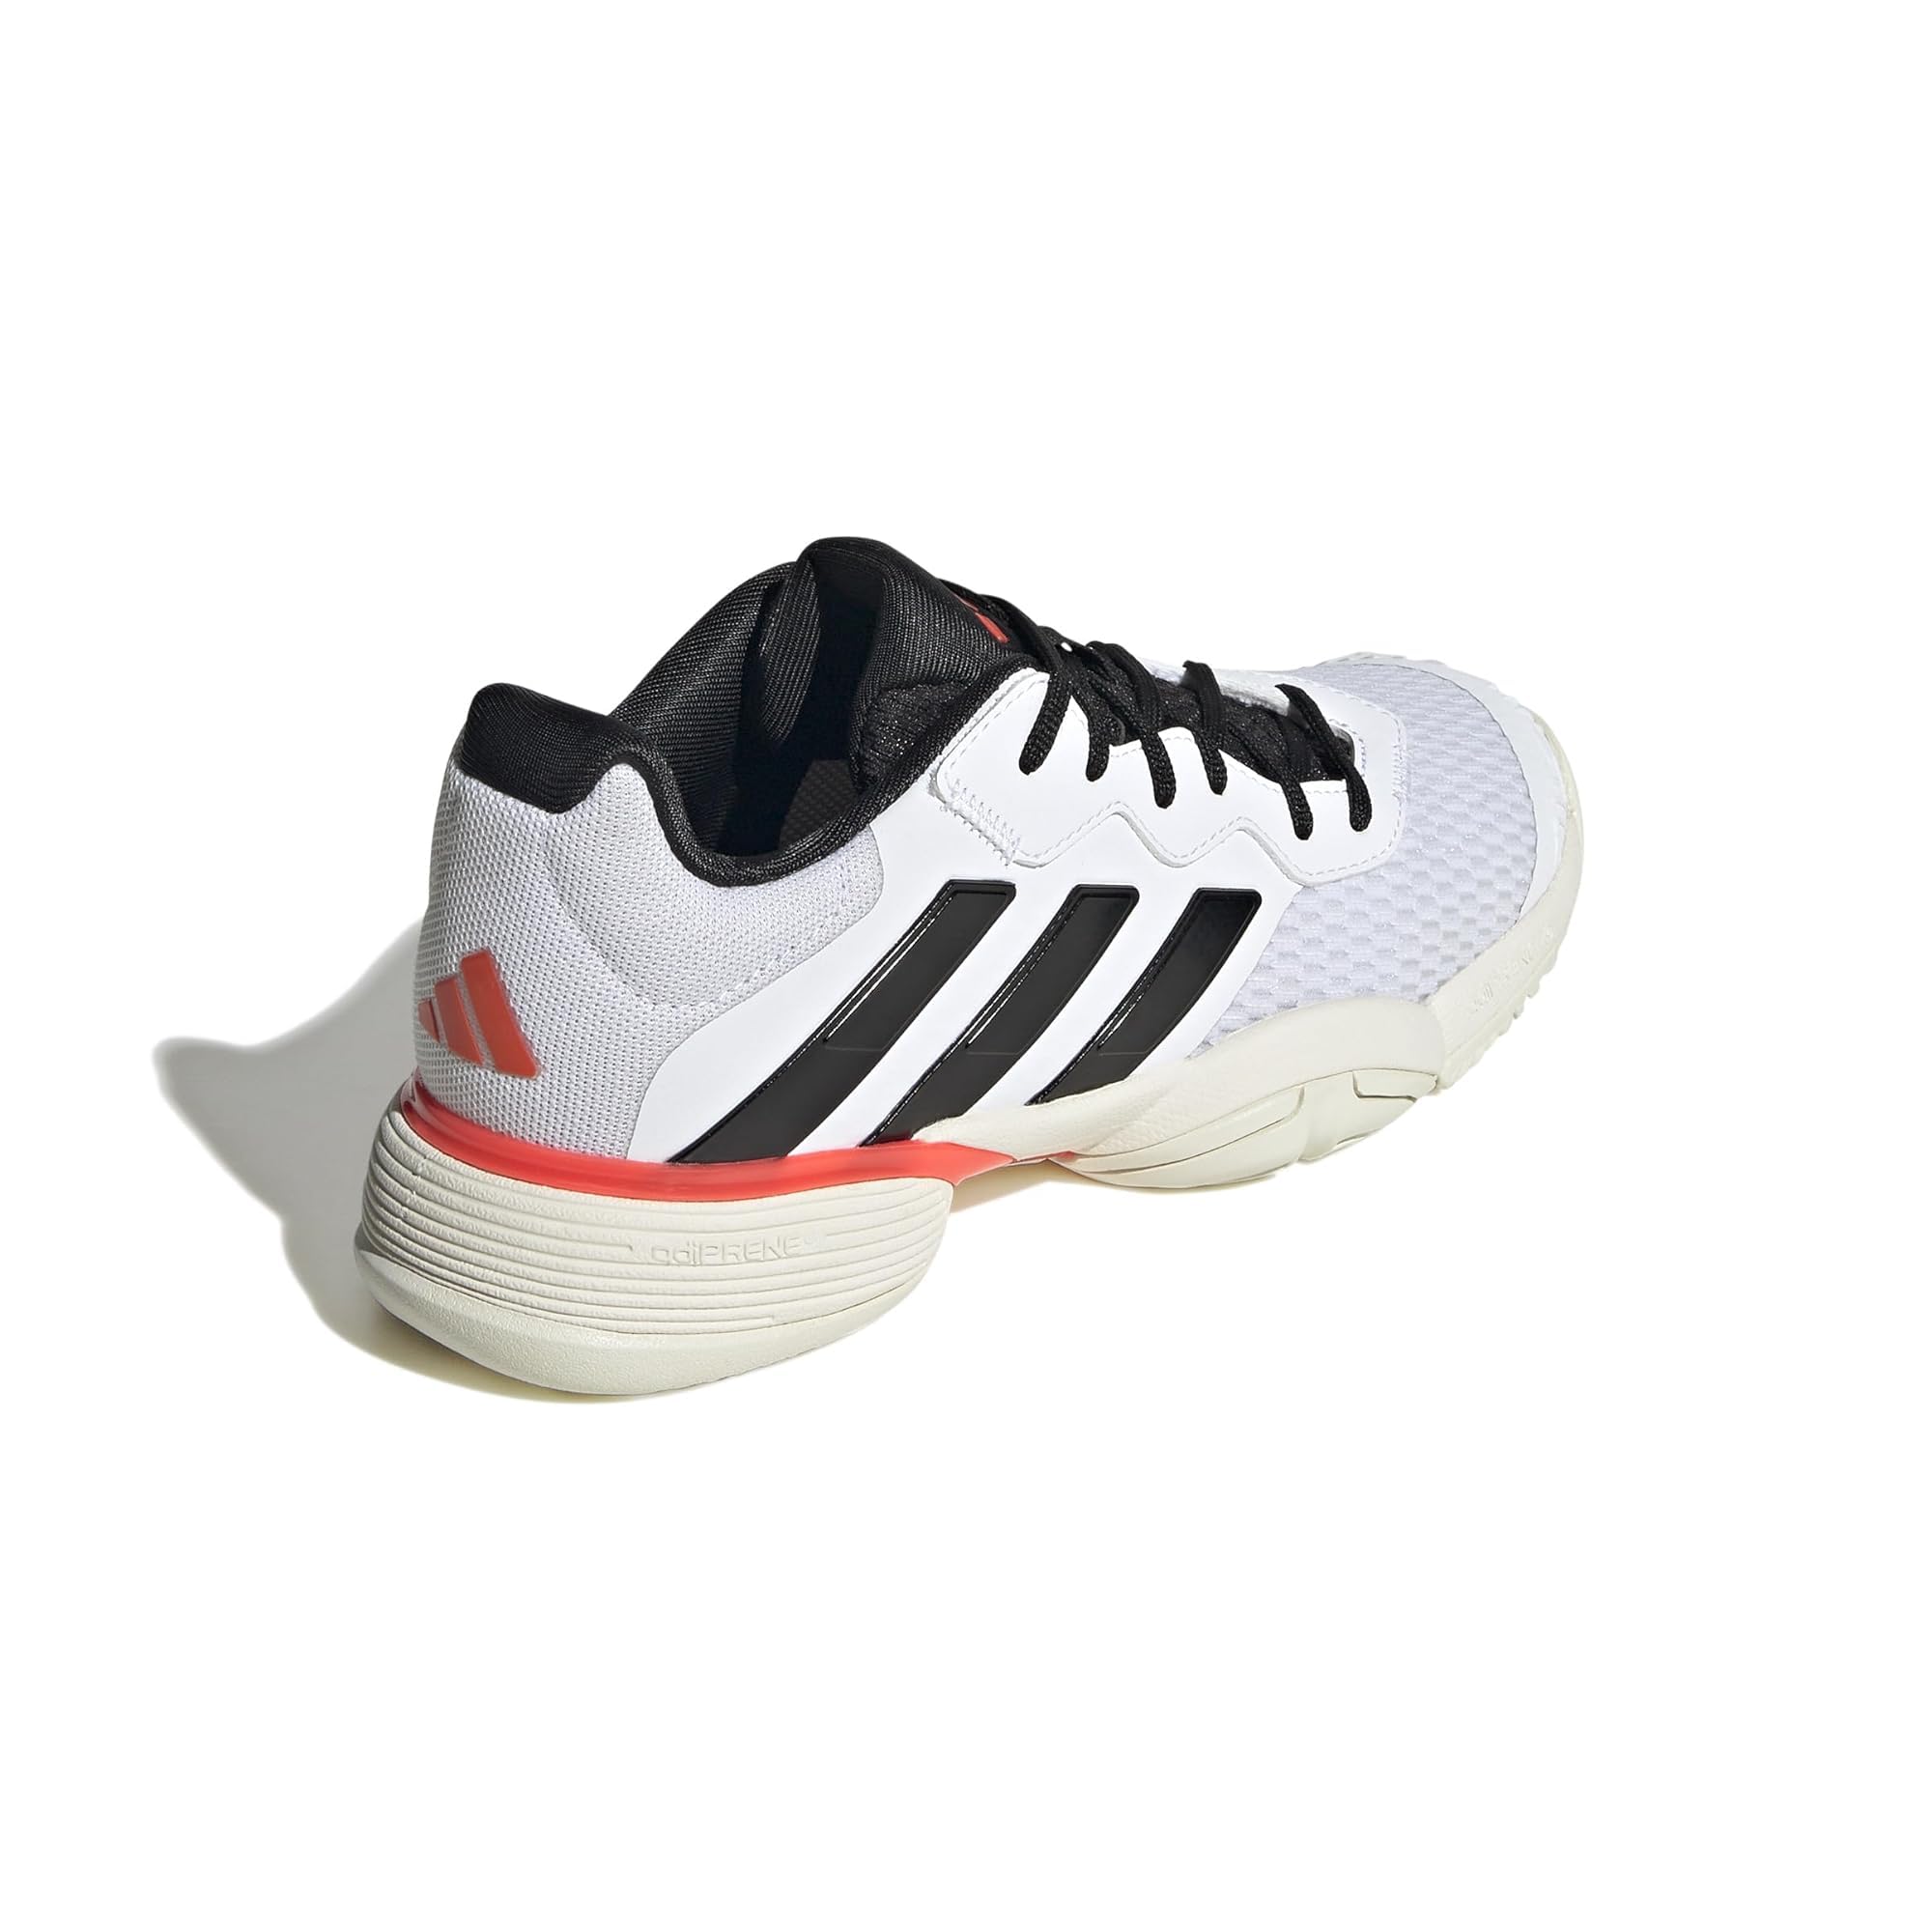 adidas Unisex-Child Barricade Sneaker